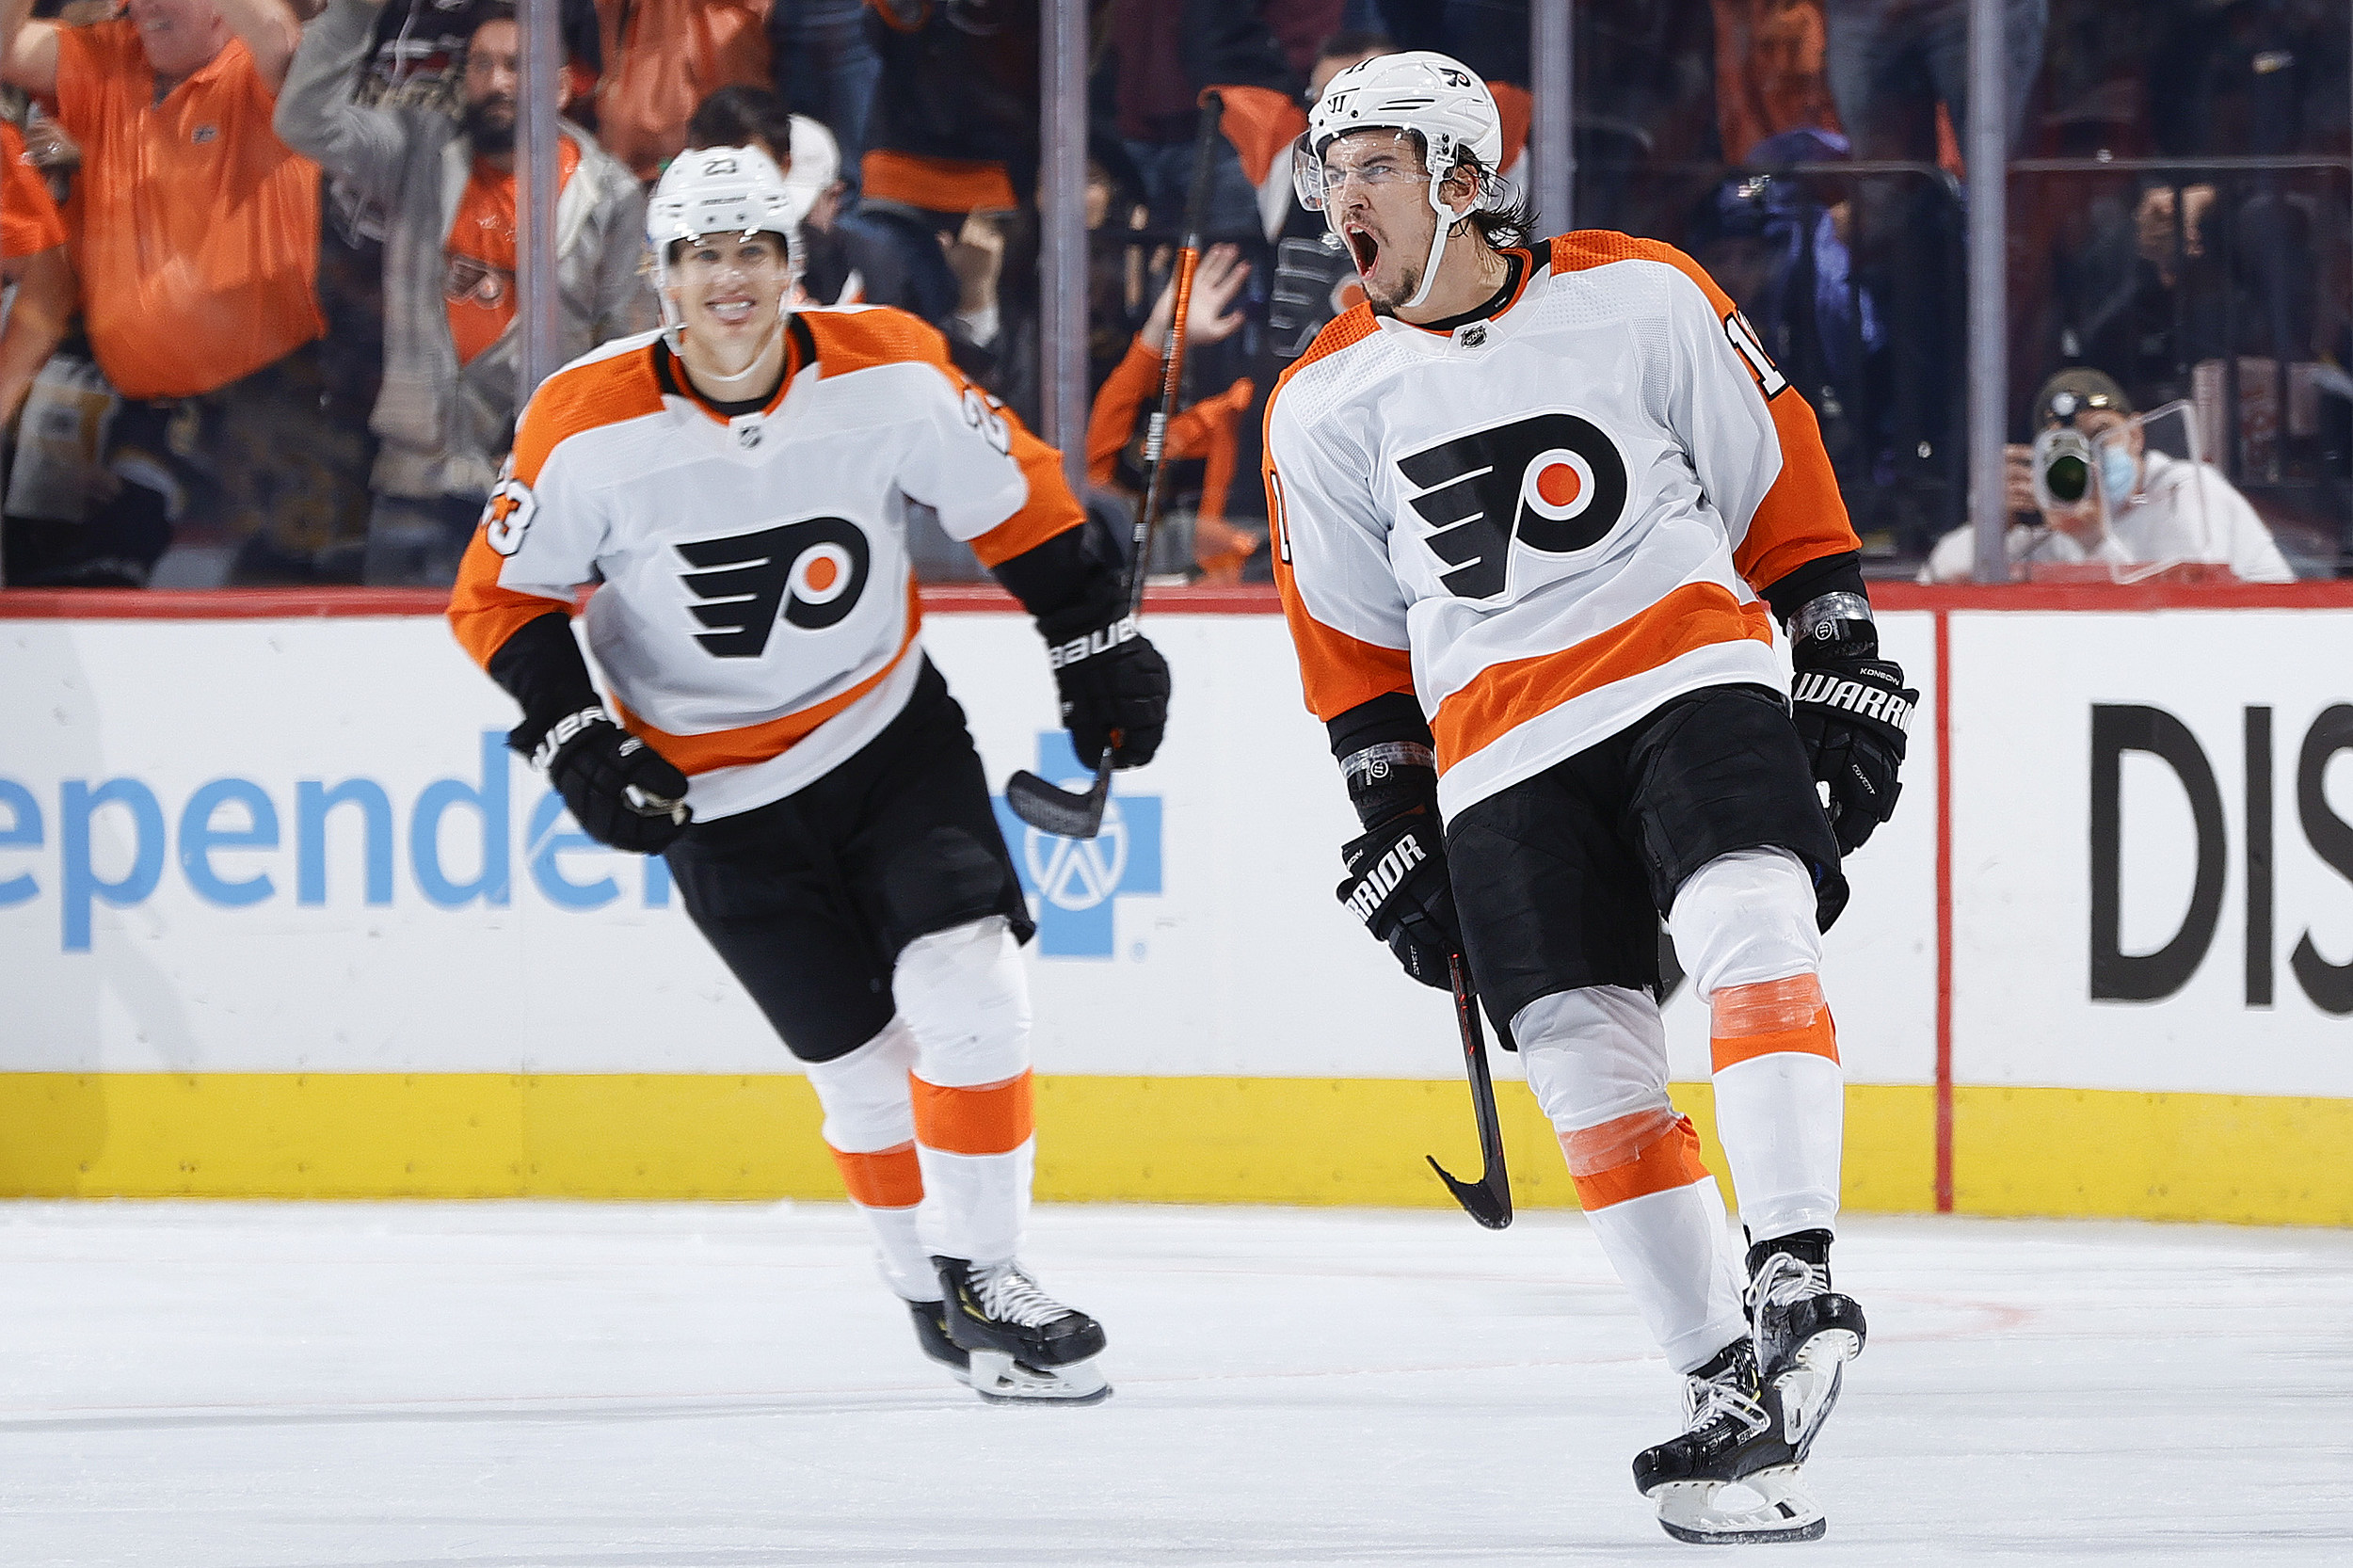 Travis Konecny Philadelphia Flyers Autographed Orange Adidas 2020